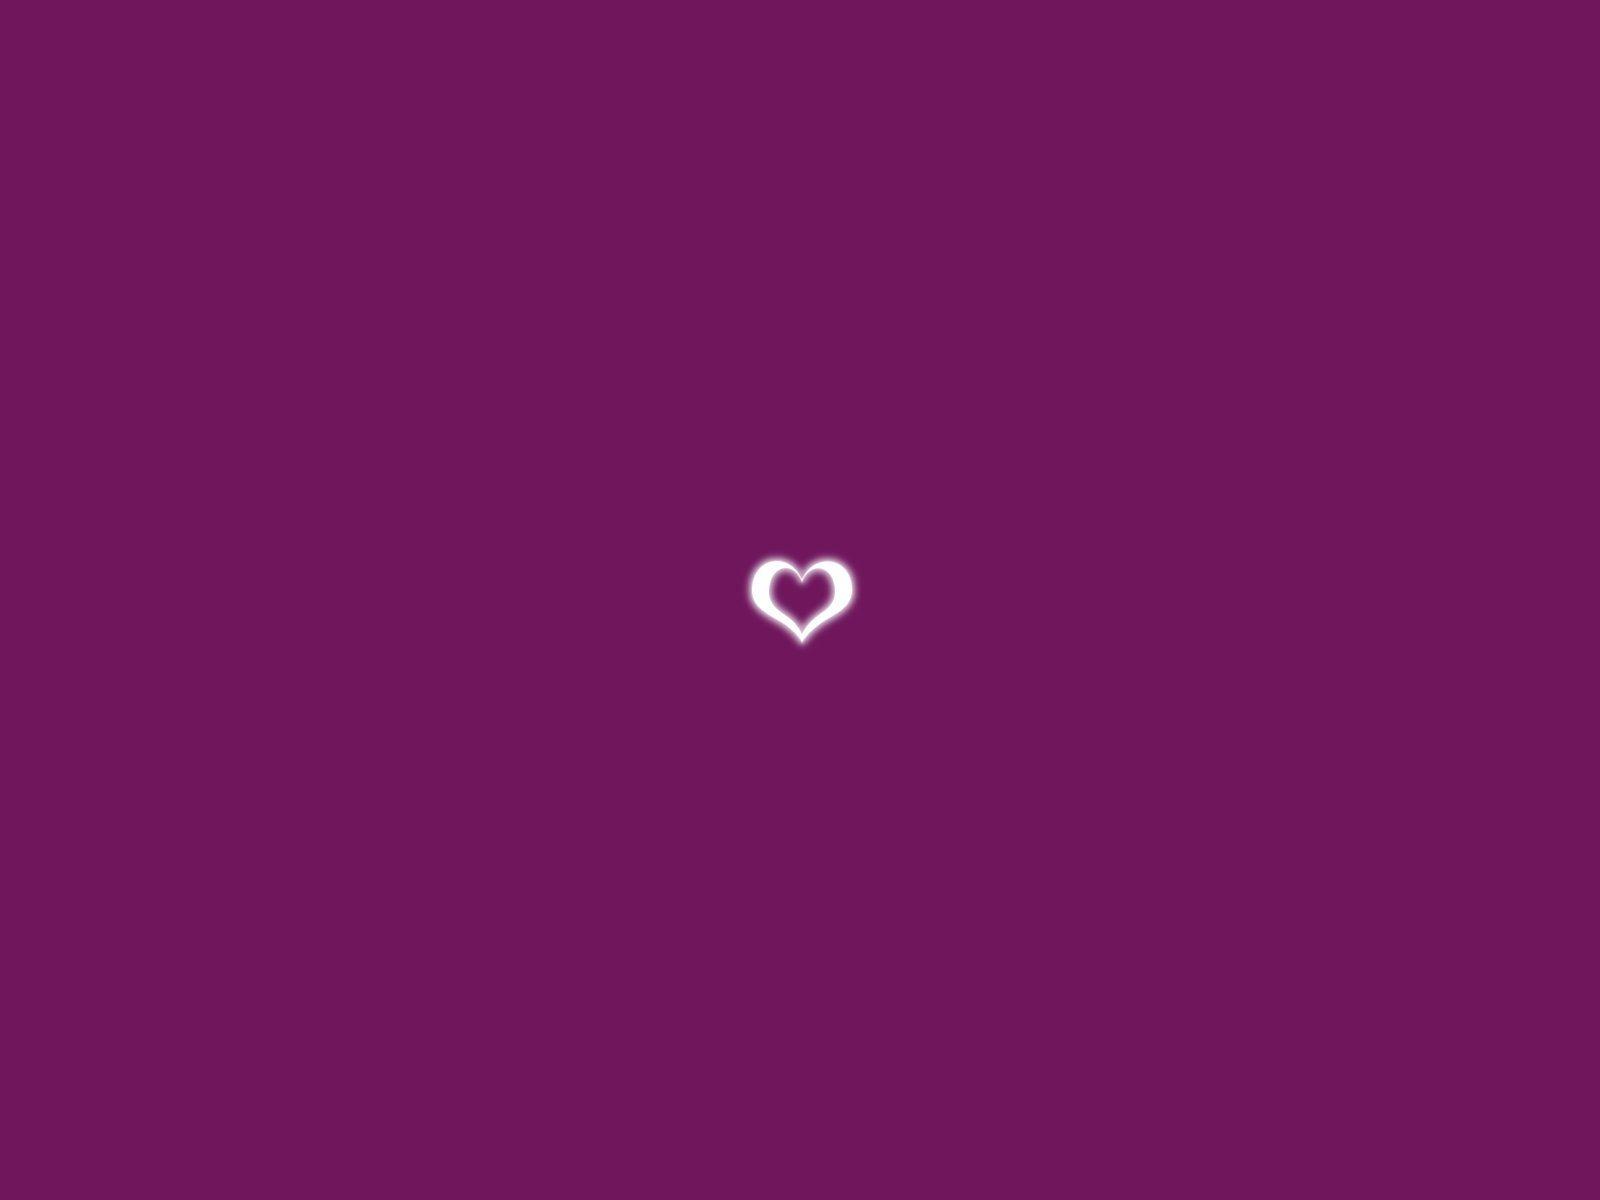 Purple Heart Memo Widget NuYshHYrFfscSutid52I for iPhone  Android by  aesthetic  WidgetClub